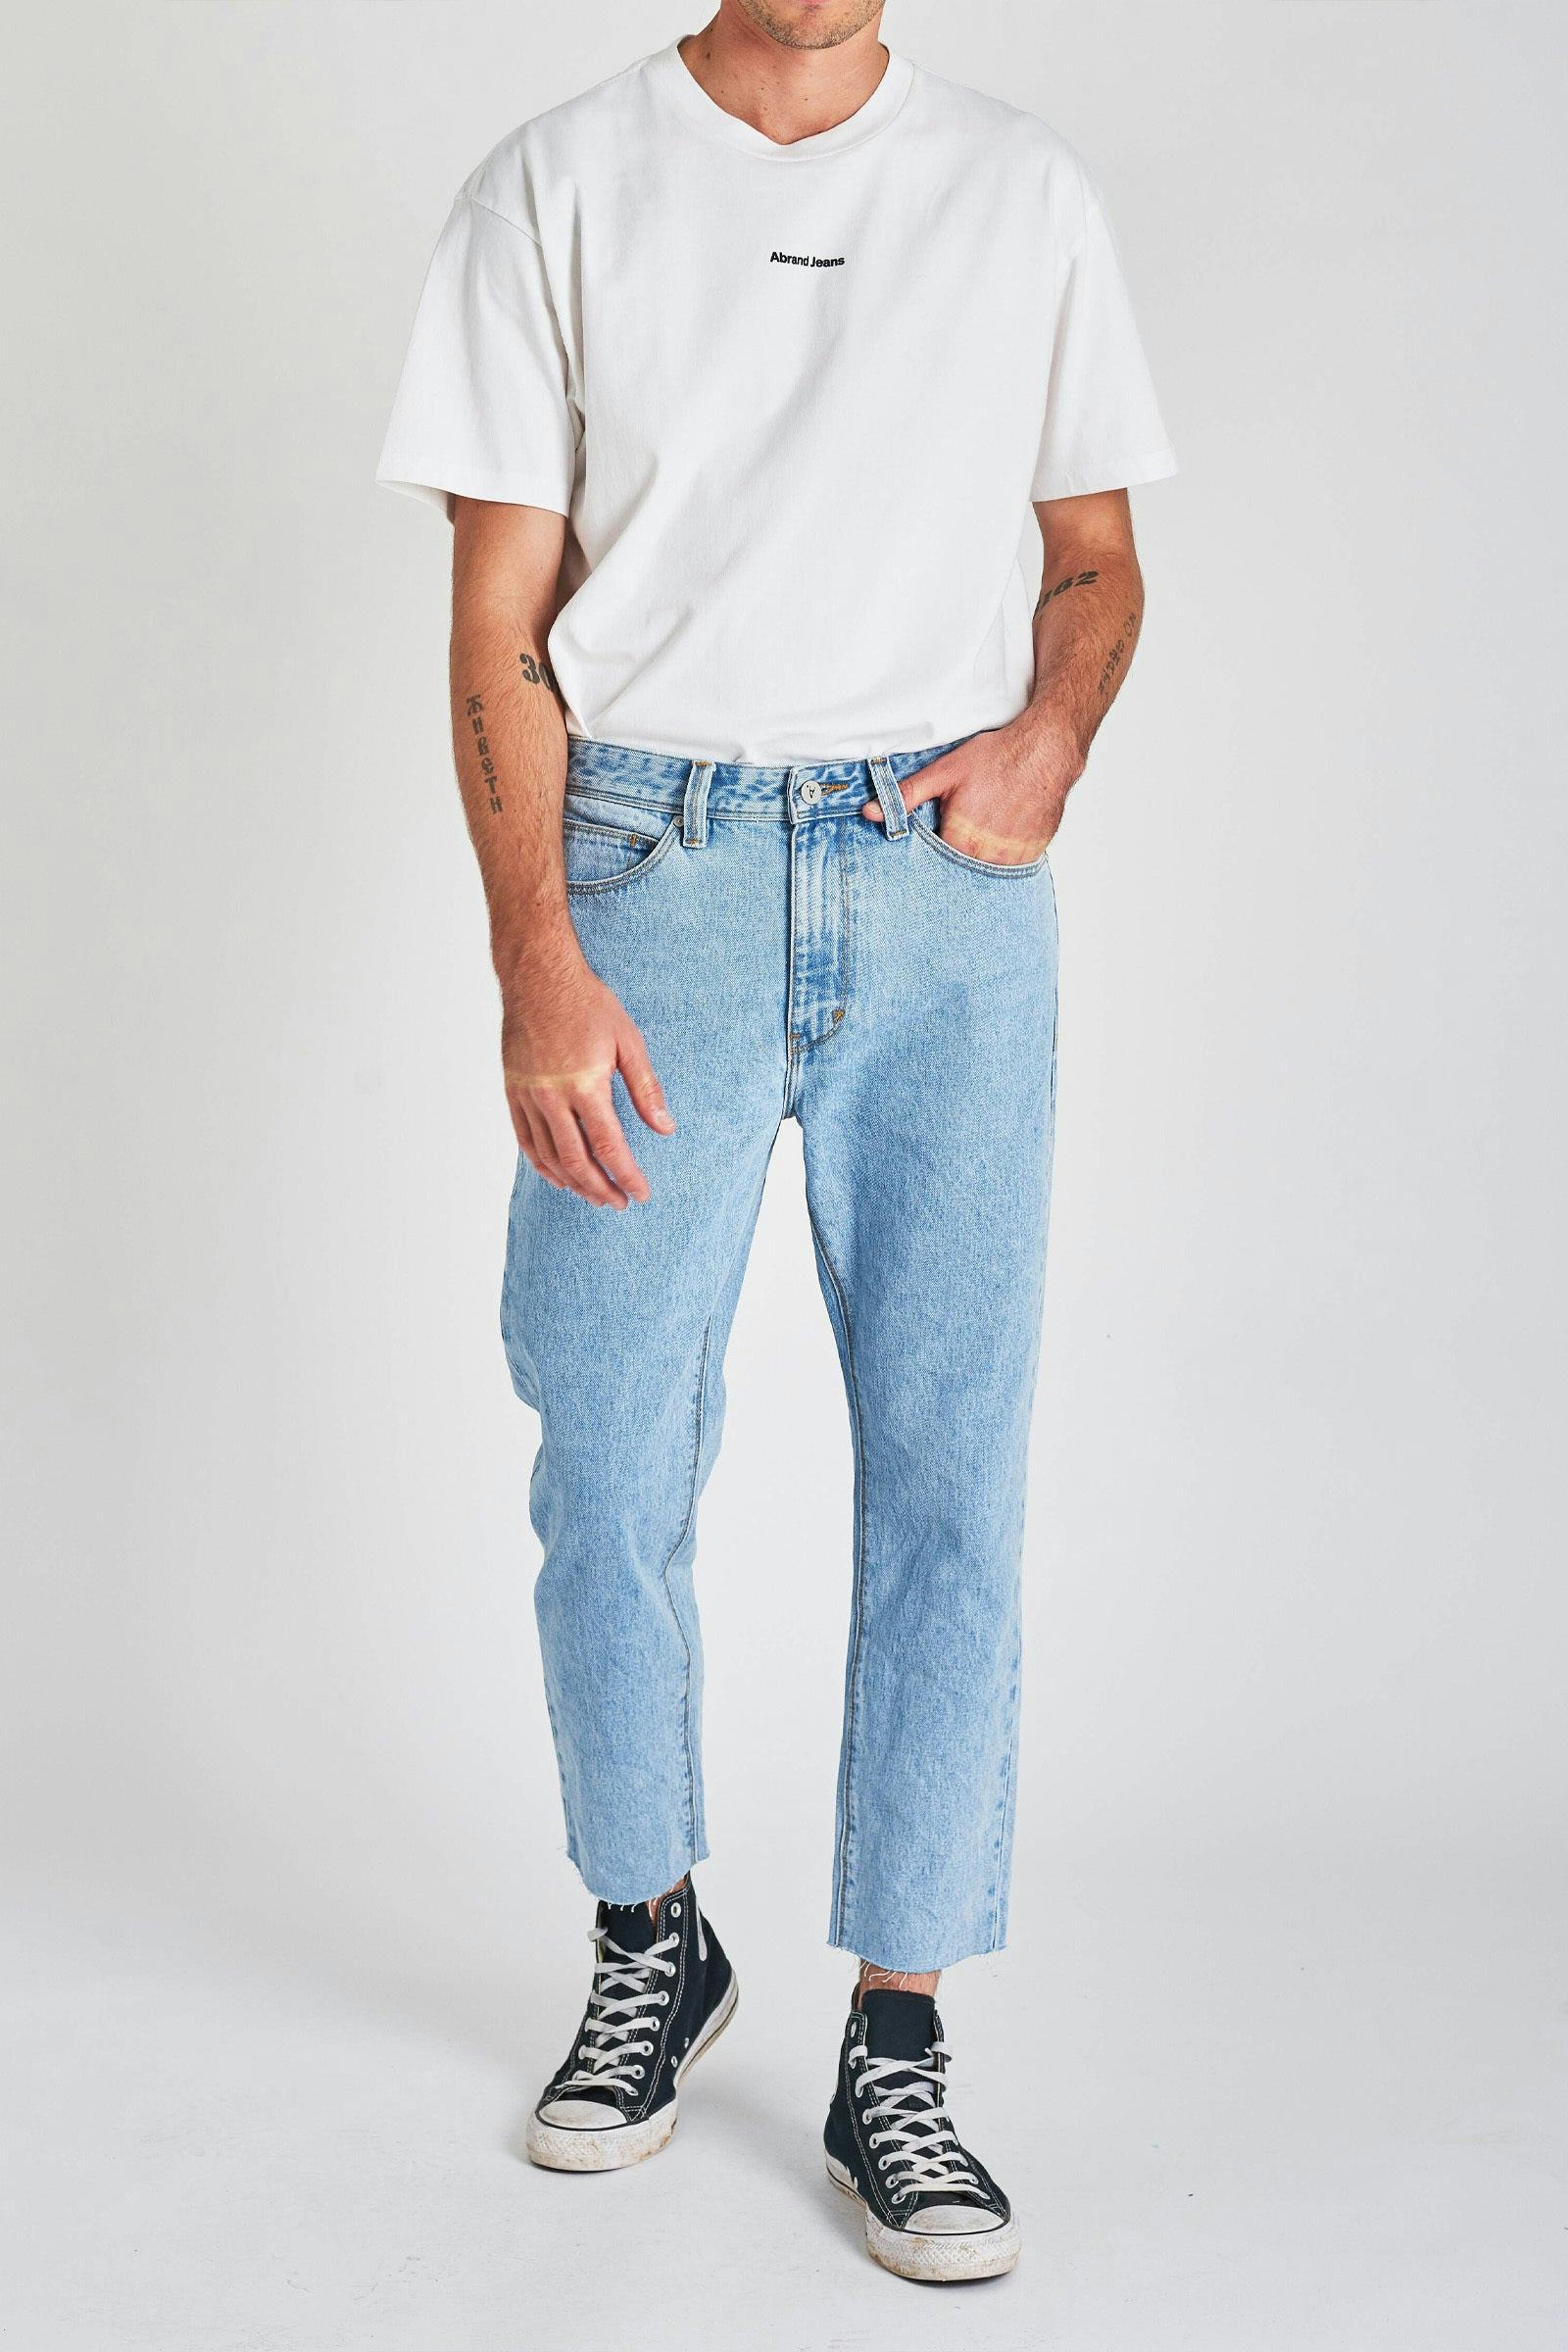 Buy Chopped Straight Walkman Online | Abrand Jeans